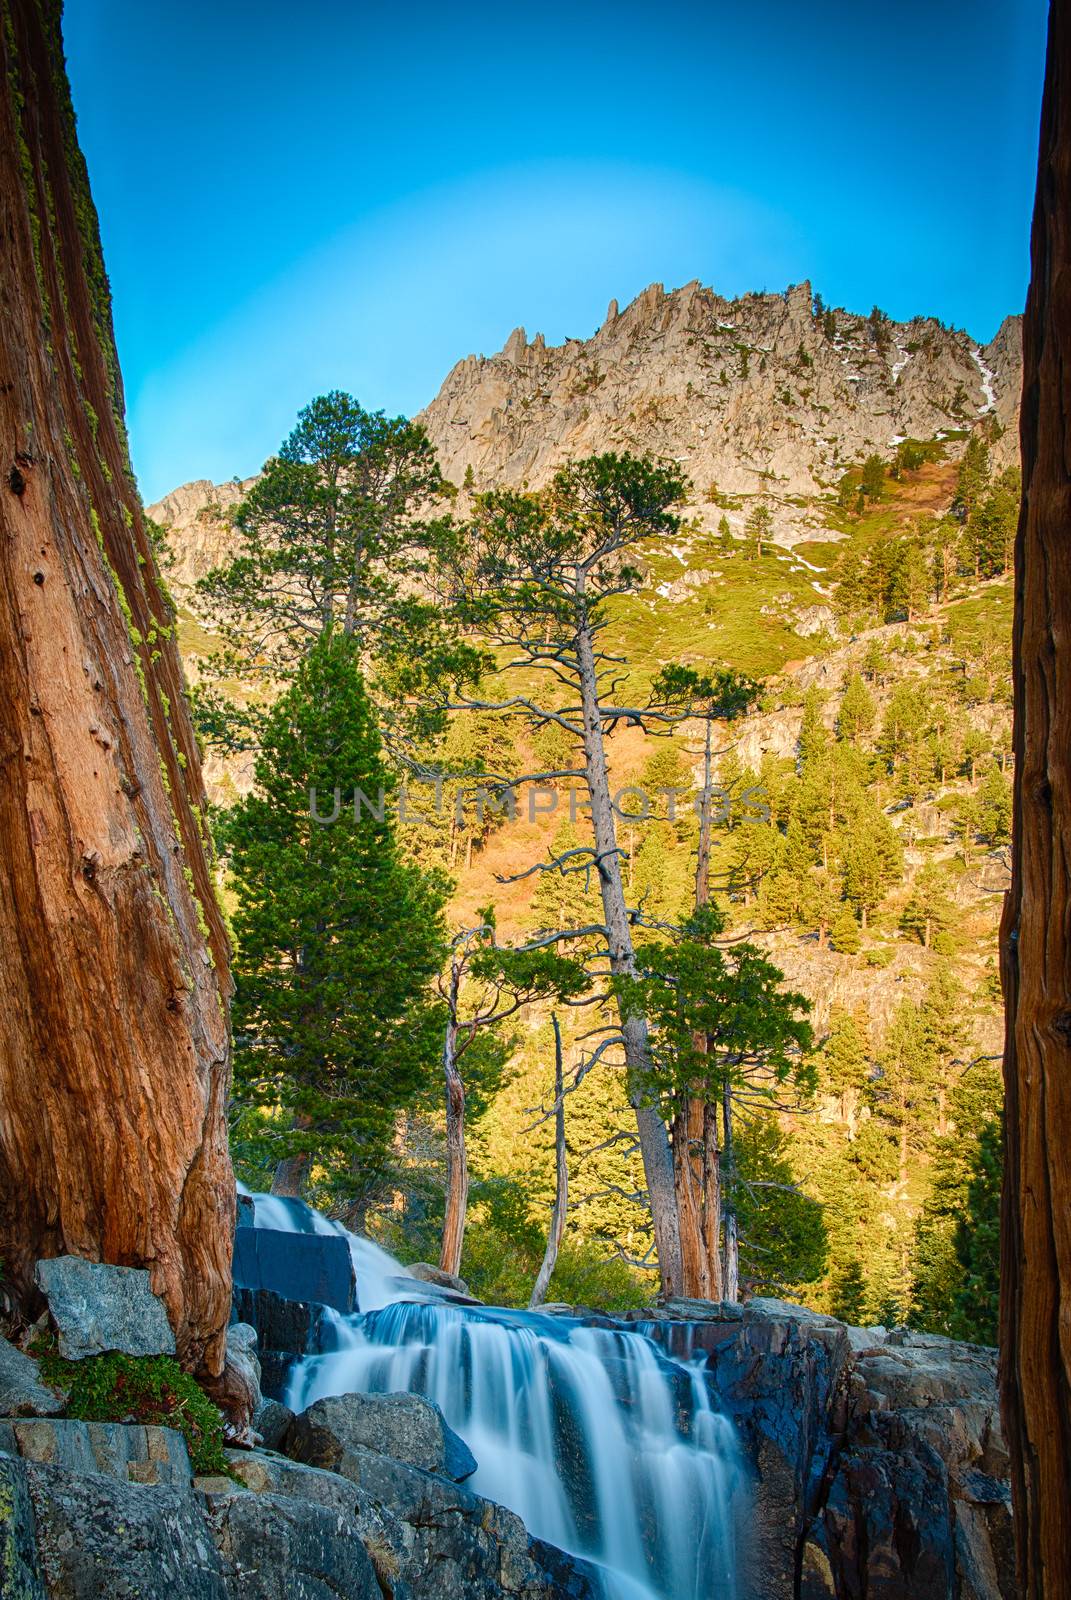 Trees and rocks on a hill, Lake Tahoe, Sierra Nevada, California, USA